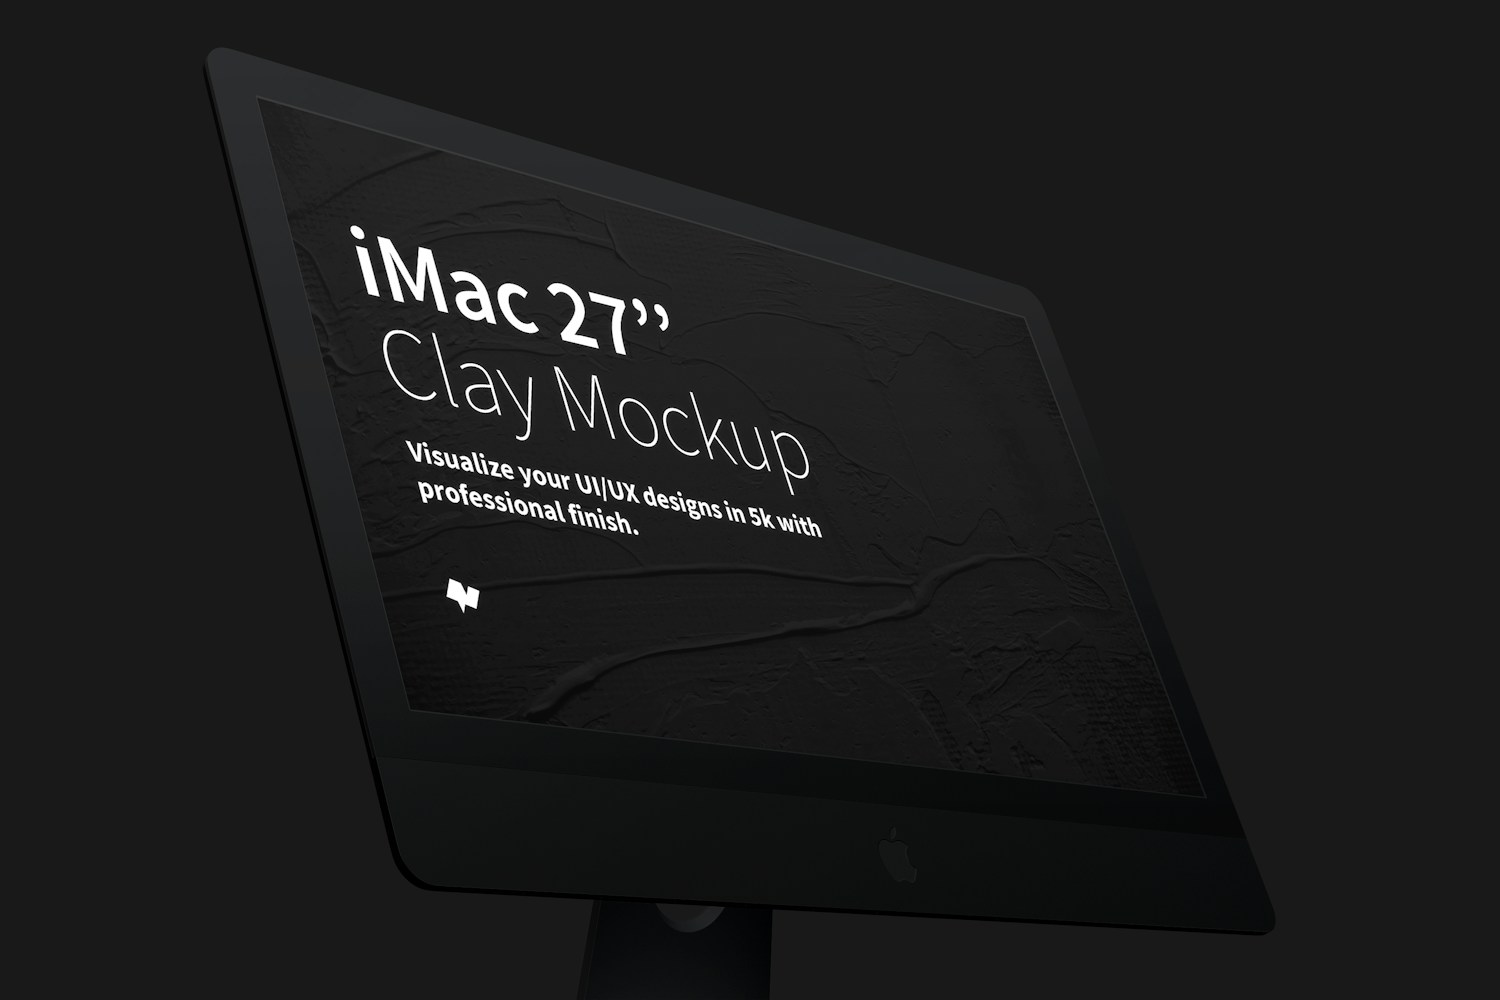 Clay iMac 27â Mockup, Display Close Up (3) by Original Mockups on Original Mockups